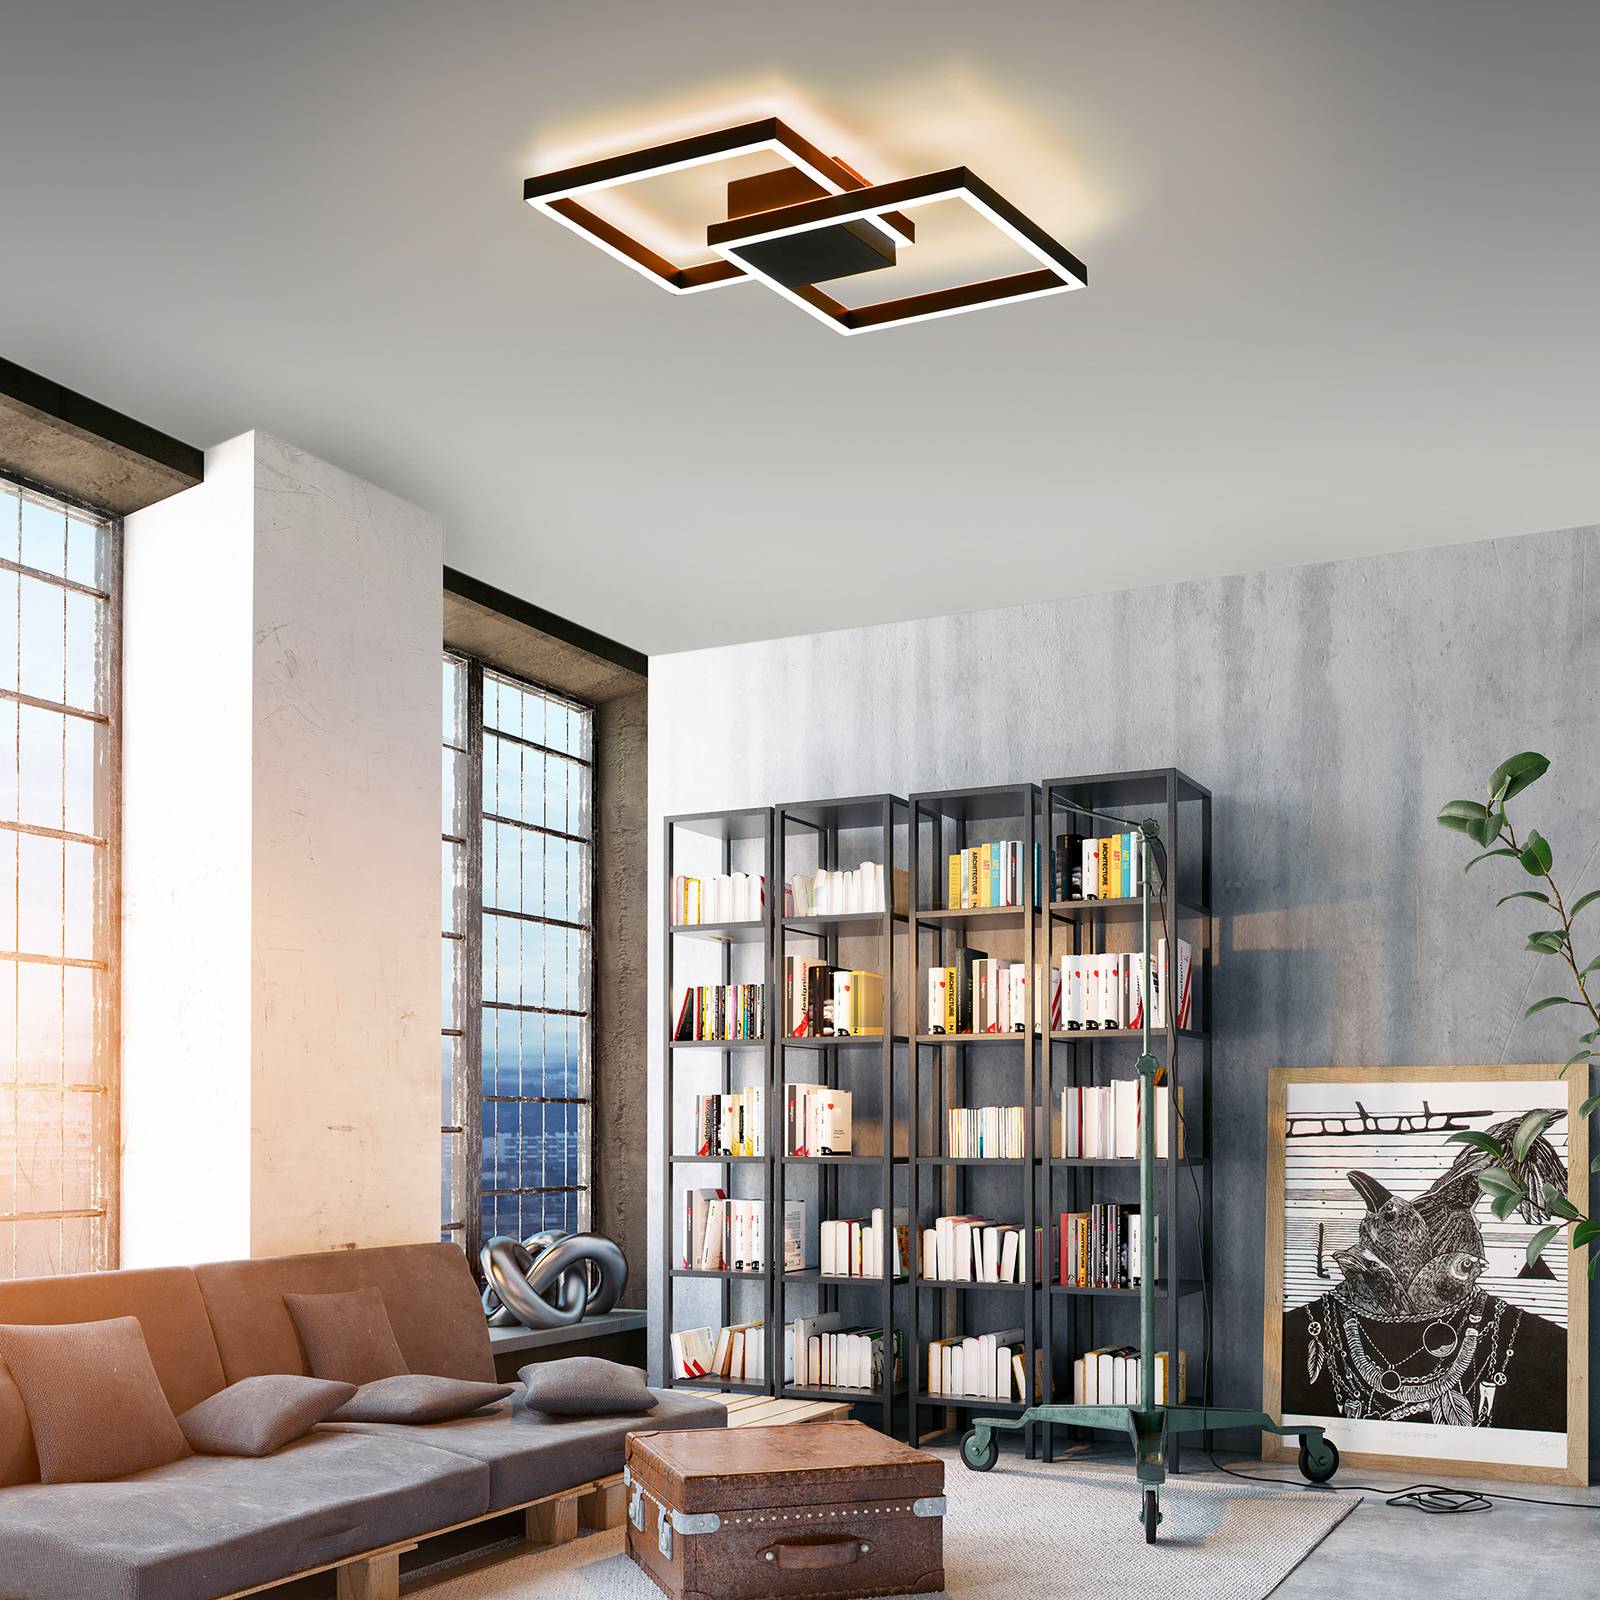 Image of Q-Smart-Home Paul Neuhaus Q-MARKO plafonnier LED, x2, angulaire 4012248366622